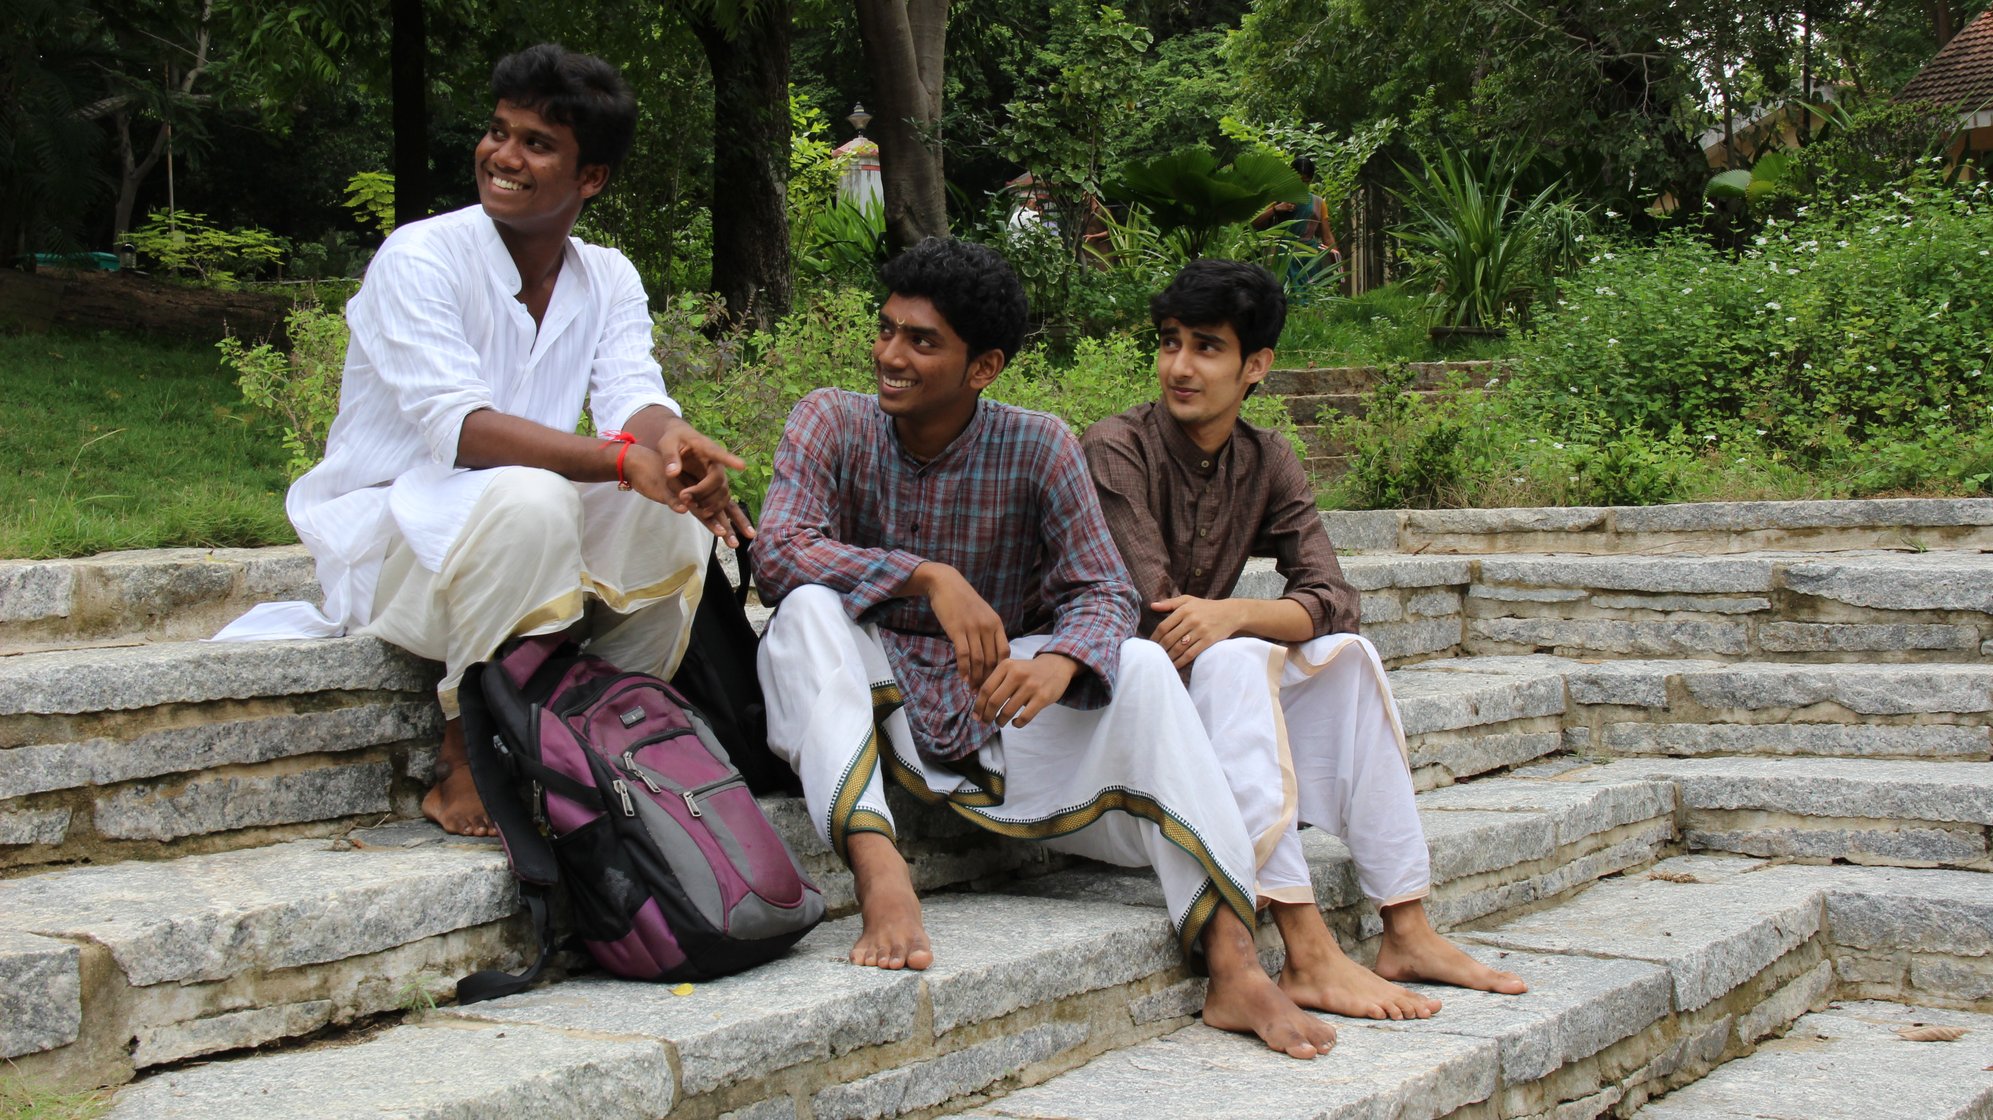 Between classes, Kali with his friends, at Kalakshetra's beautiful, green campus